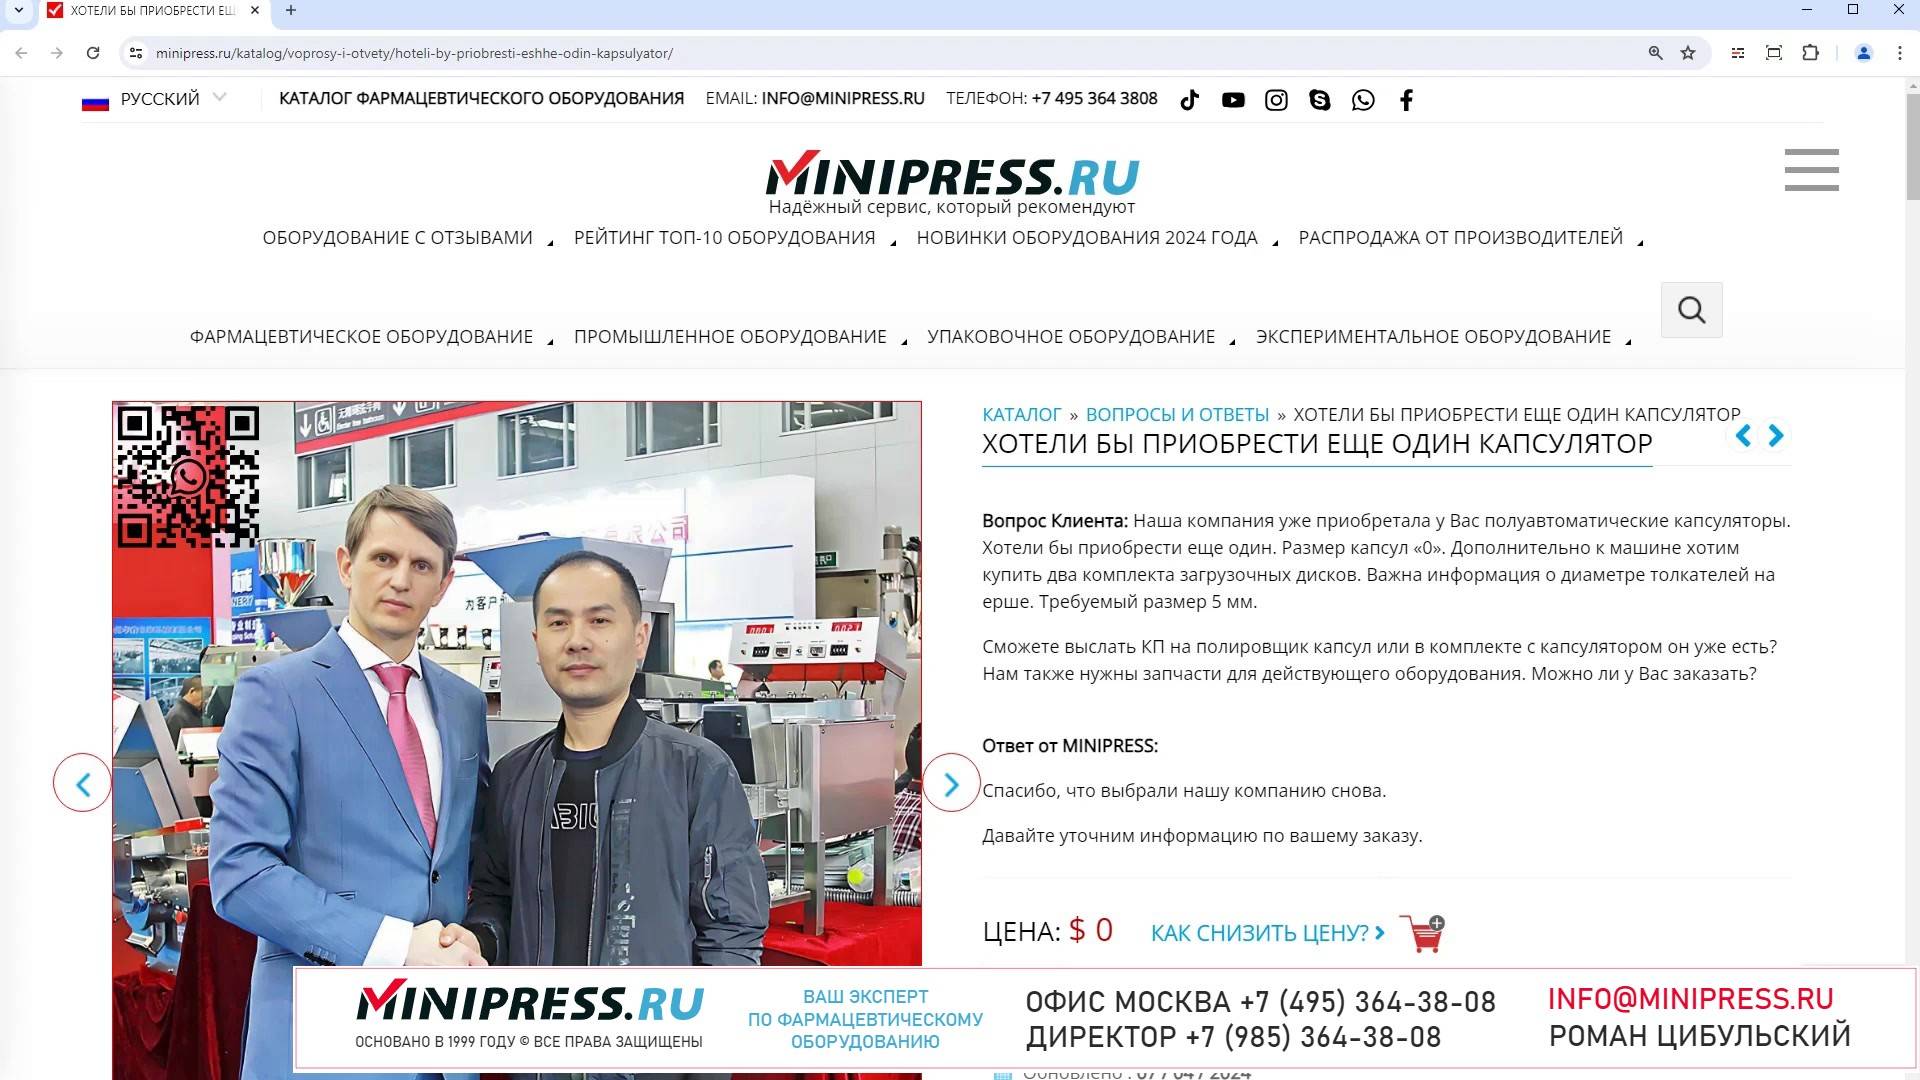 Minipress.ru Хотели бы приобрести еще один капсулятор